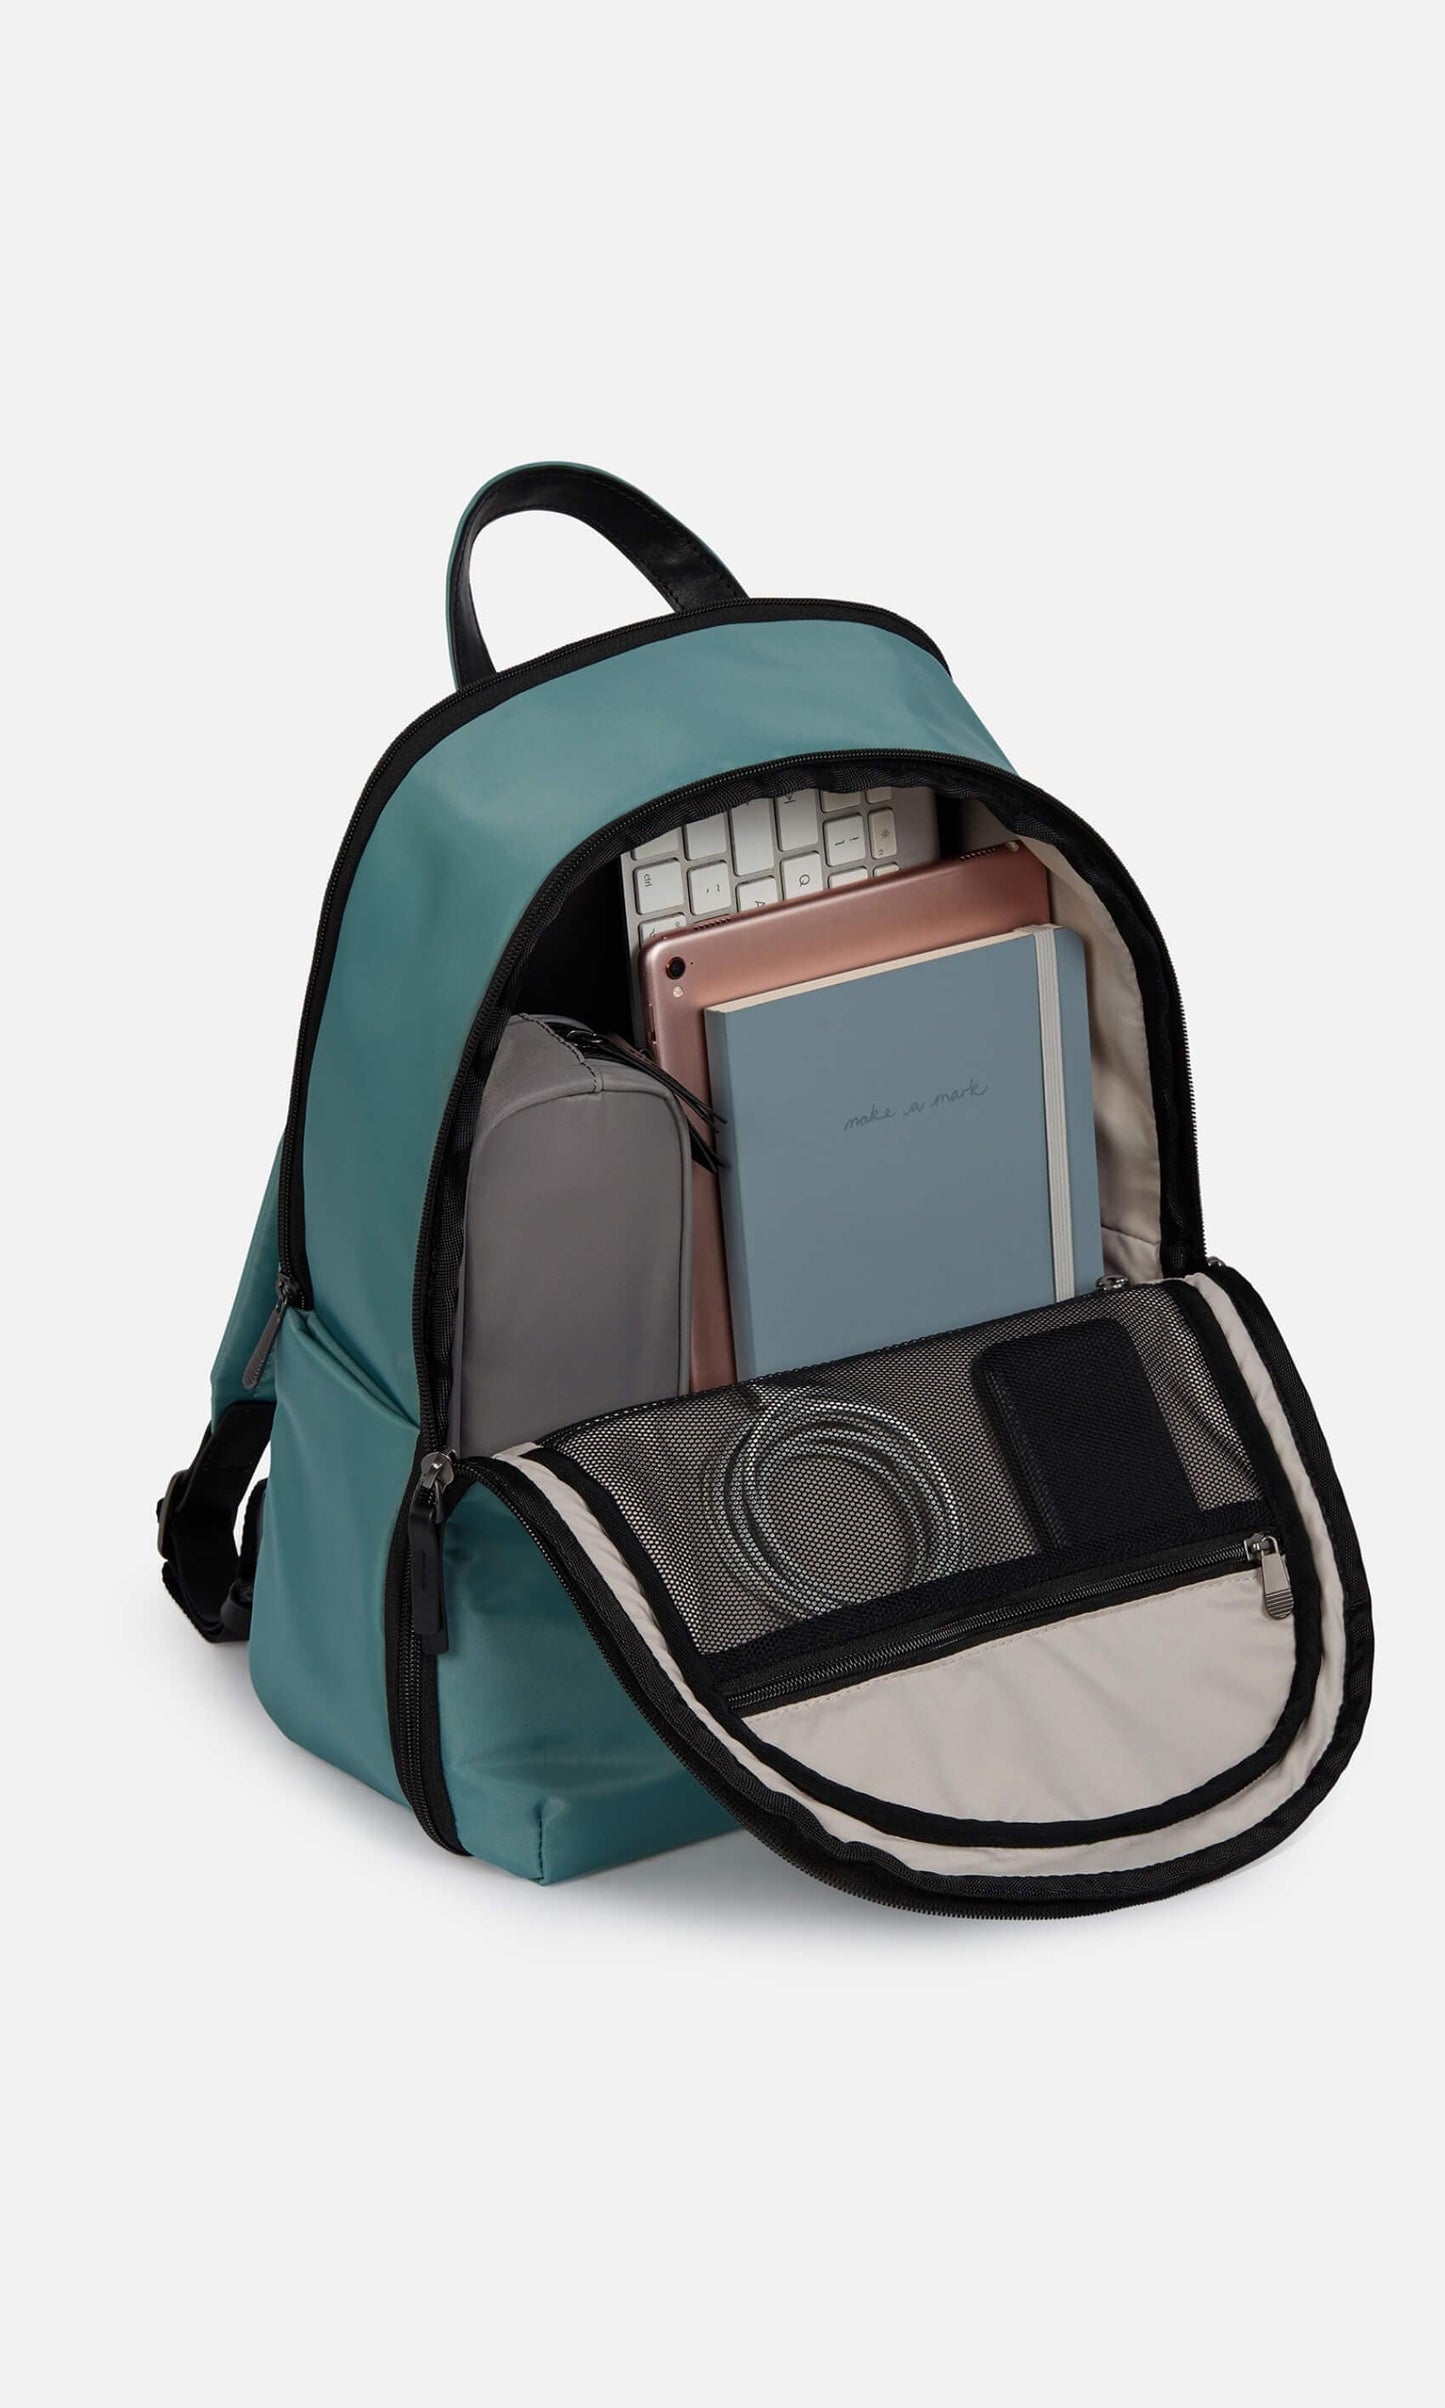 Antler Luggage -  Chelsea large backpack in mineral - Backpacks Chelsea Backpack Mineral (Blue) | Travel & Lifestyle Bags | Antler UK